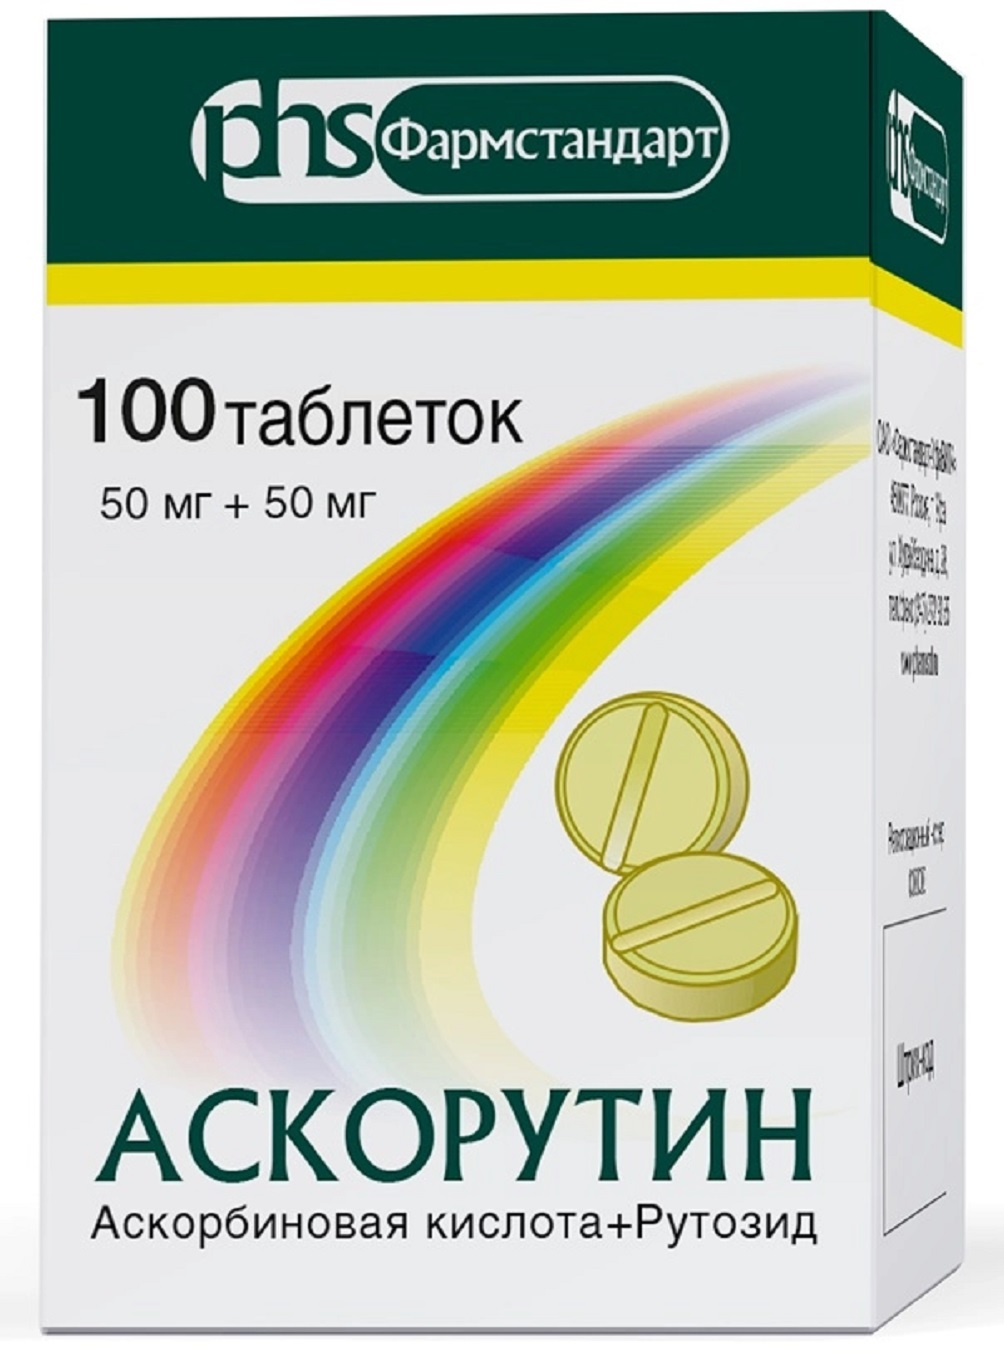 Аскорутин, таблетки 50 мг + 50 мг, 100 шт. аскорбиновая кислота с сахаром малина таблетки 3 г 10 шт